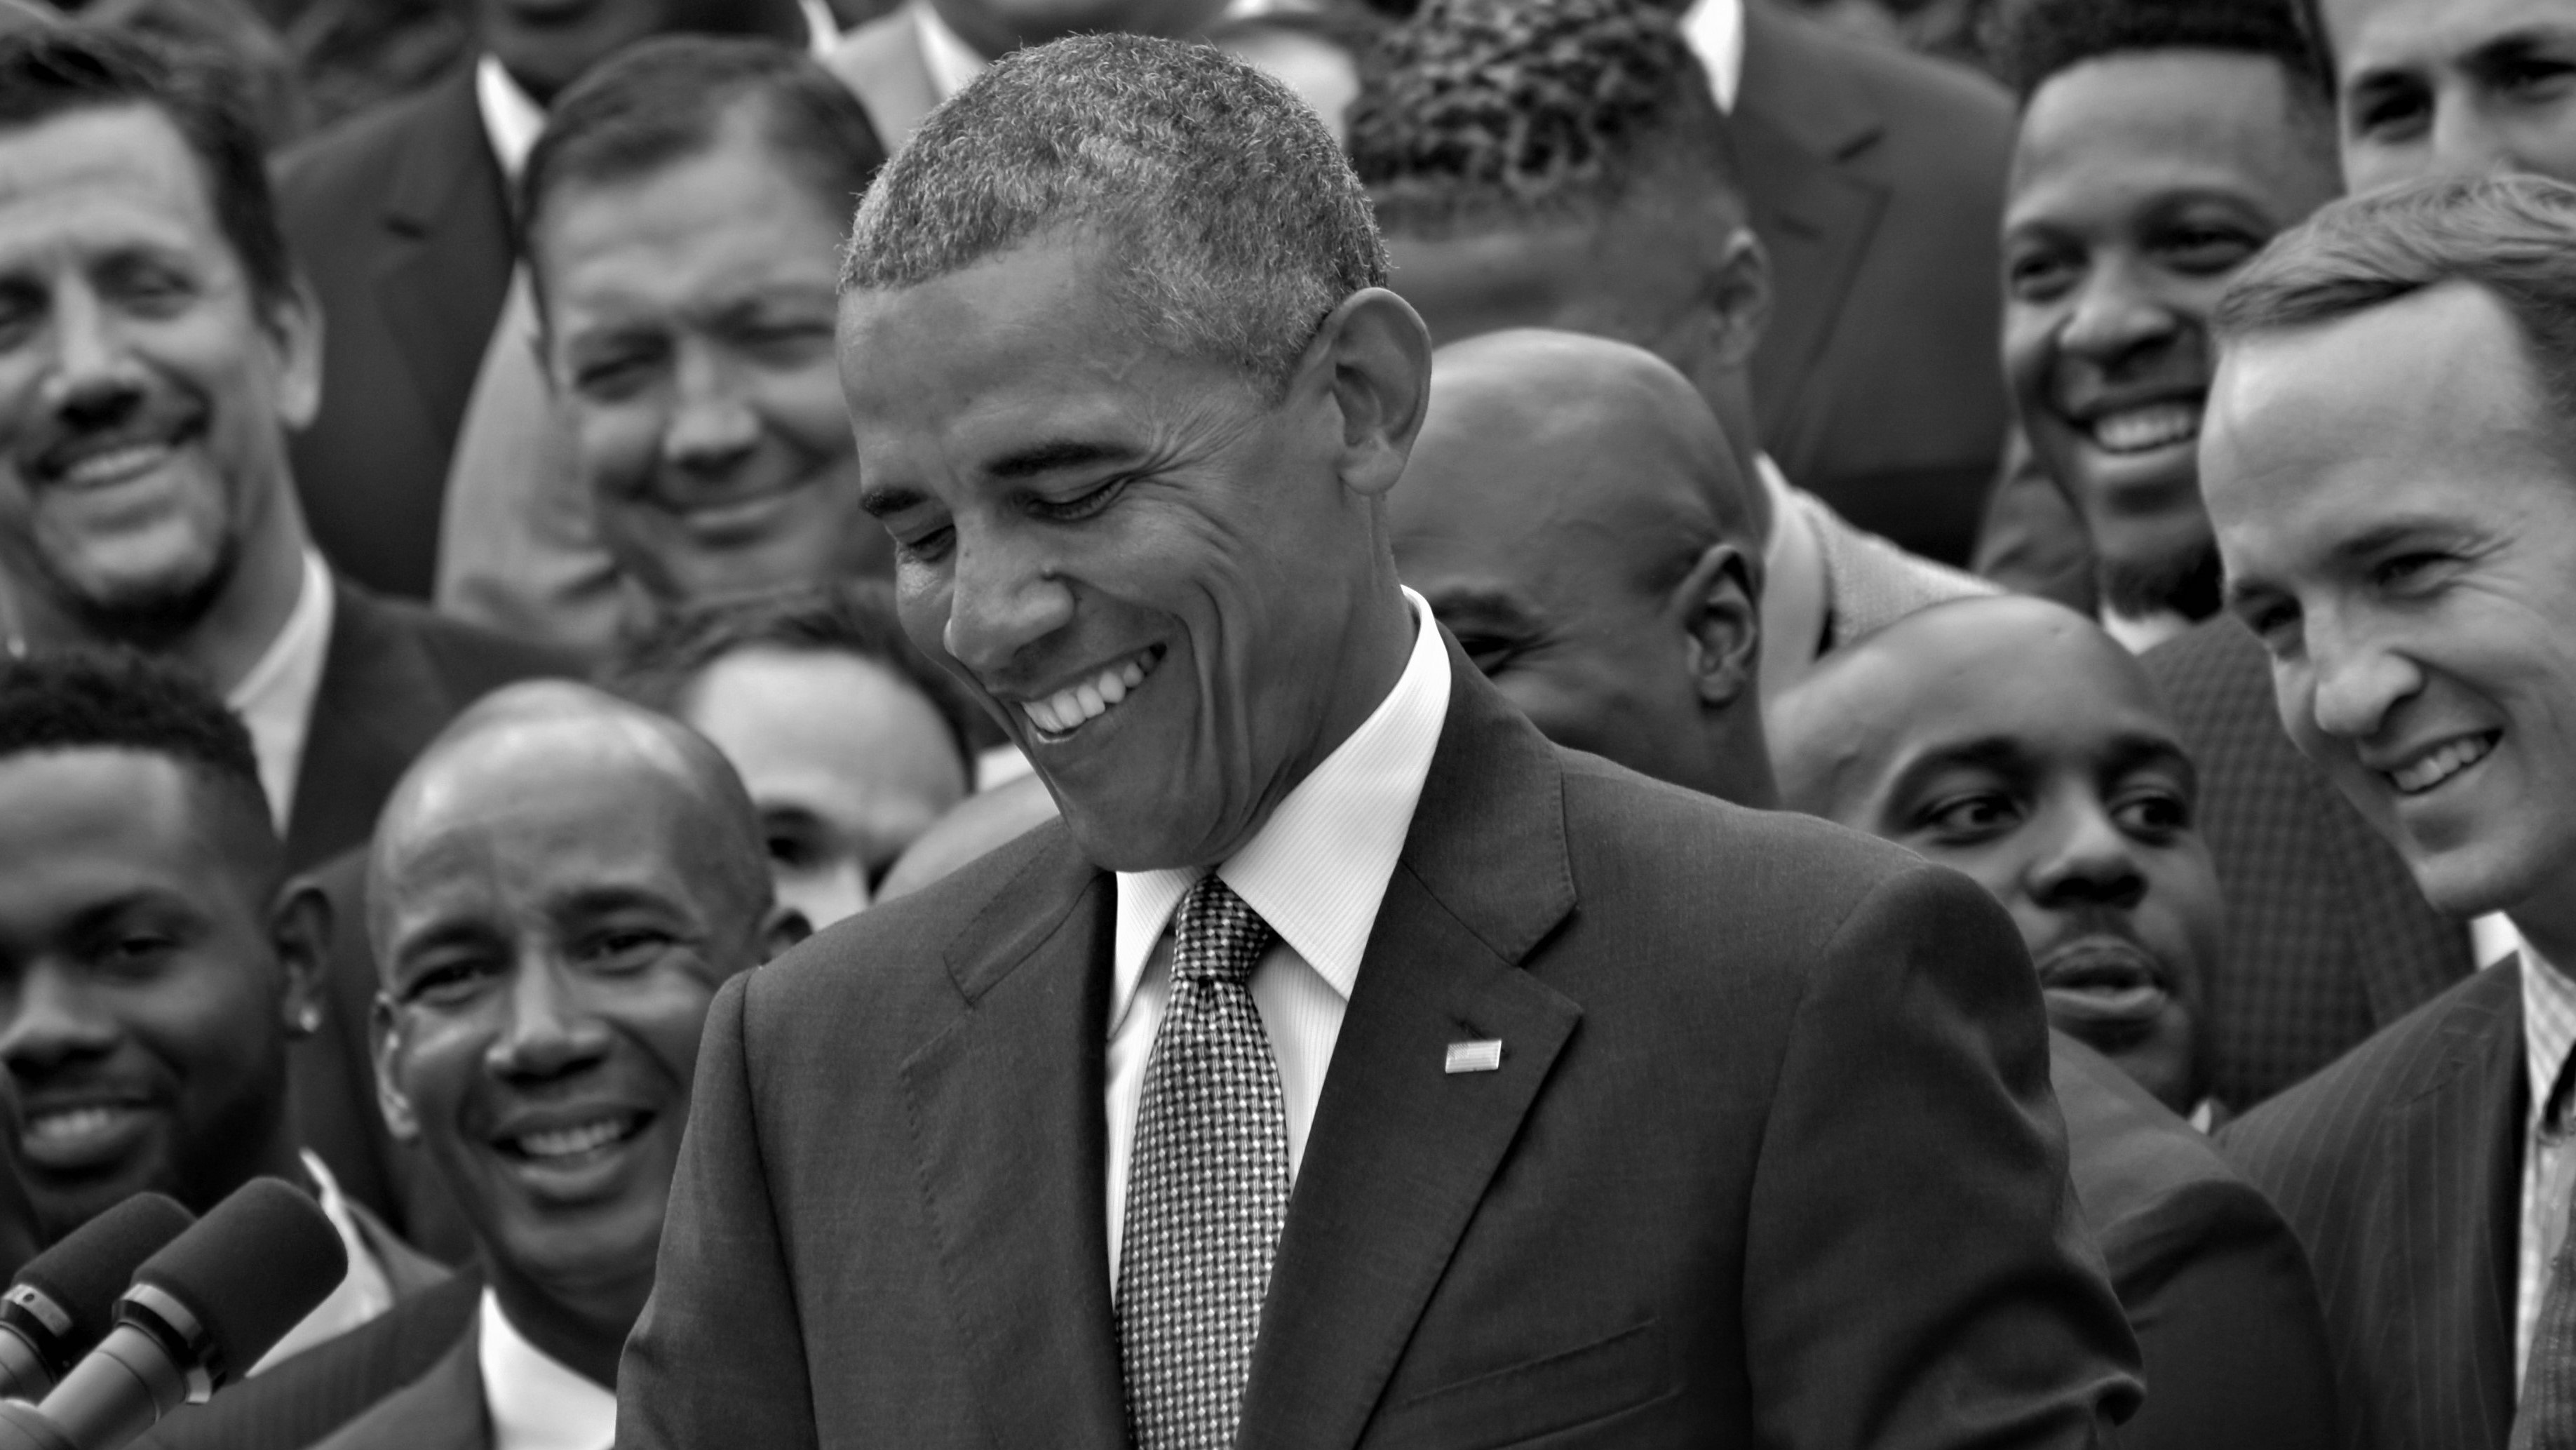 President Barack Obama, photo by Anna Wilding